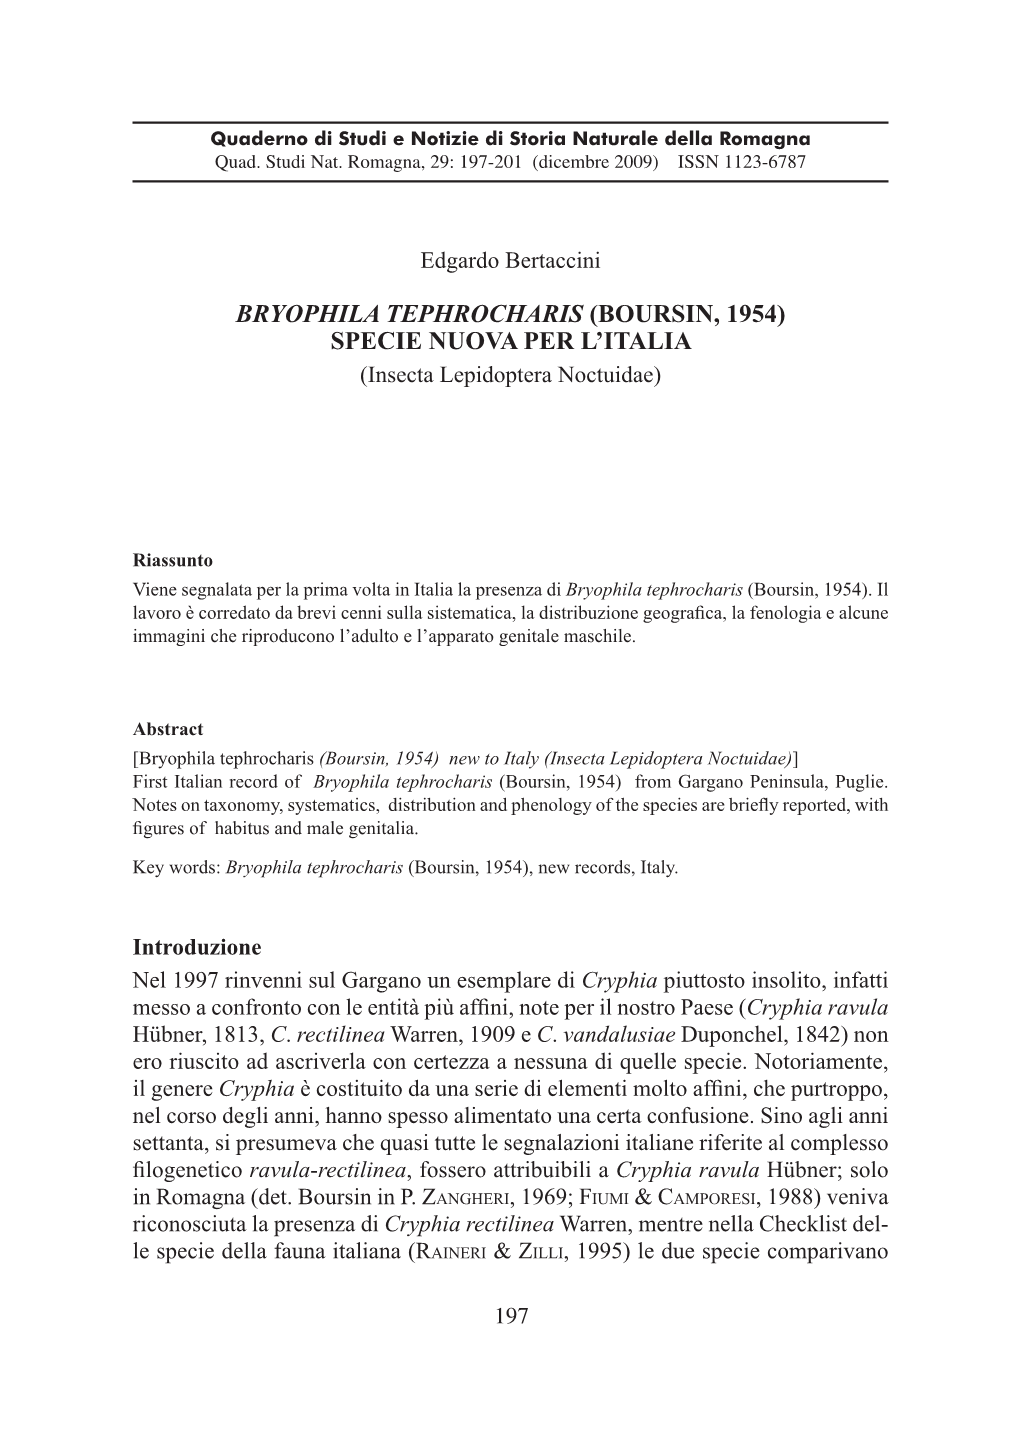 BRYOPHILA TEPHROCHARIS (BOURSIN, 1954) SPECIE NUOVA PER L’ITALIA (Insecta Lepidoptera Noctuidae)